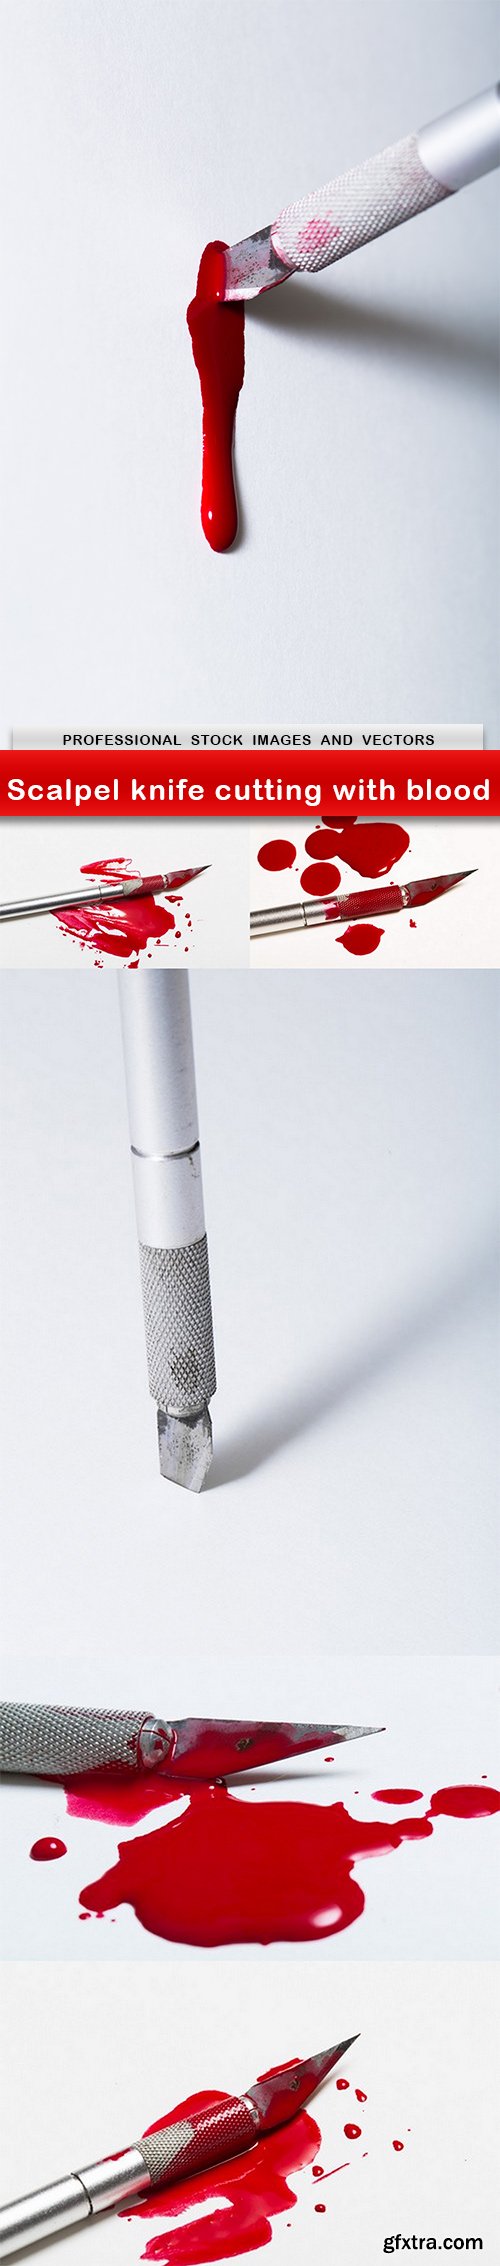 Scalpel knife cutting with blood - 6 UHQ JPEG